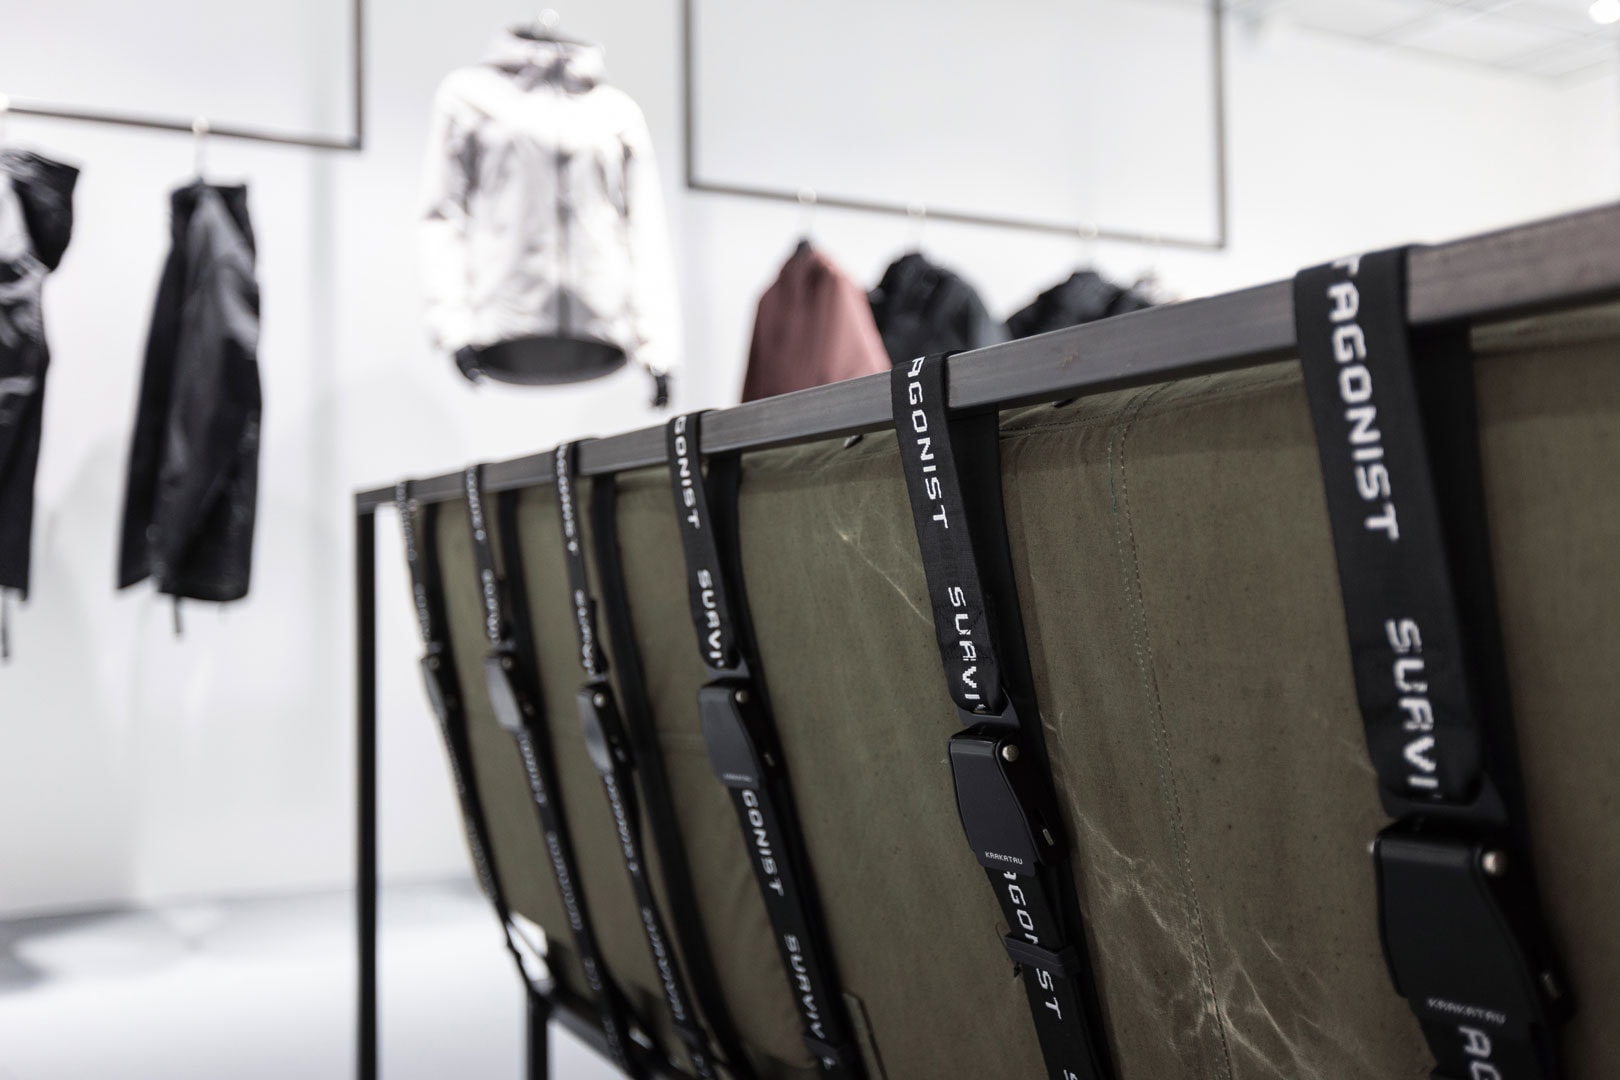 krakatau russia flagship store open techwear technical clothing june 2018 saint petersburg